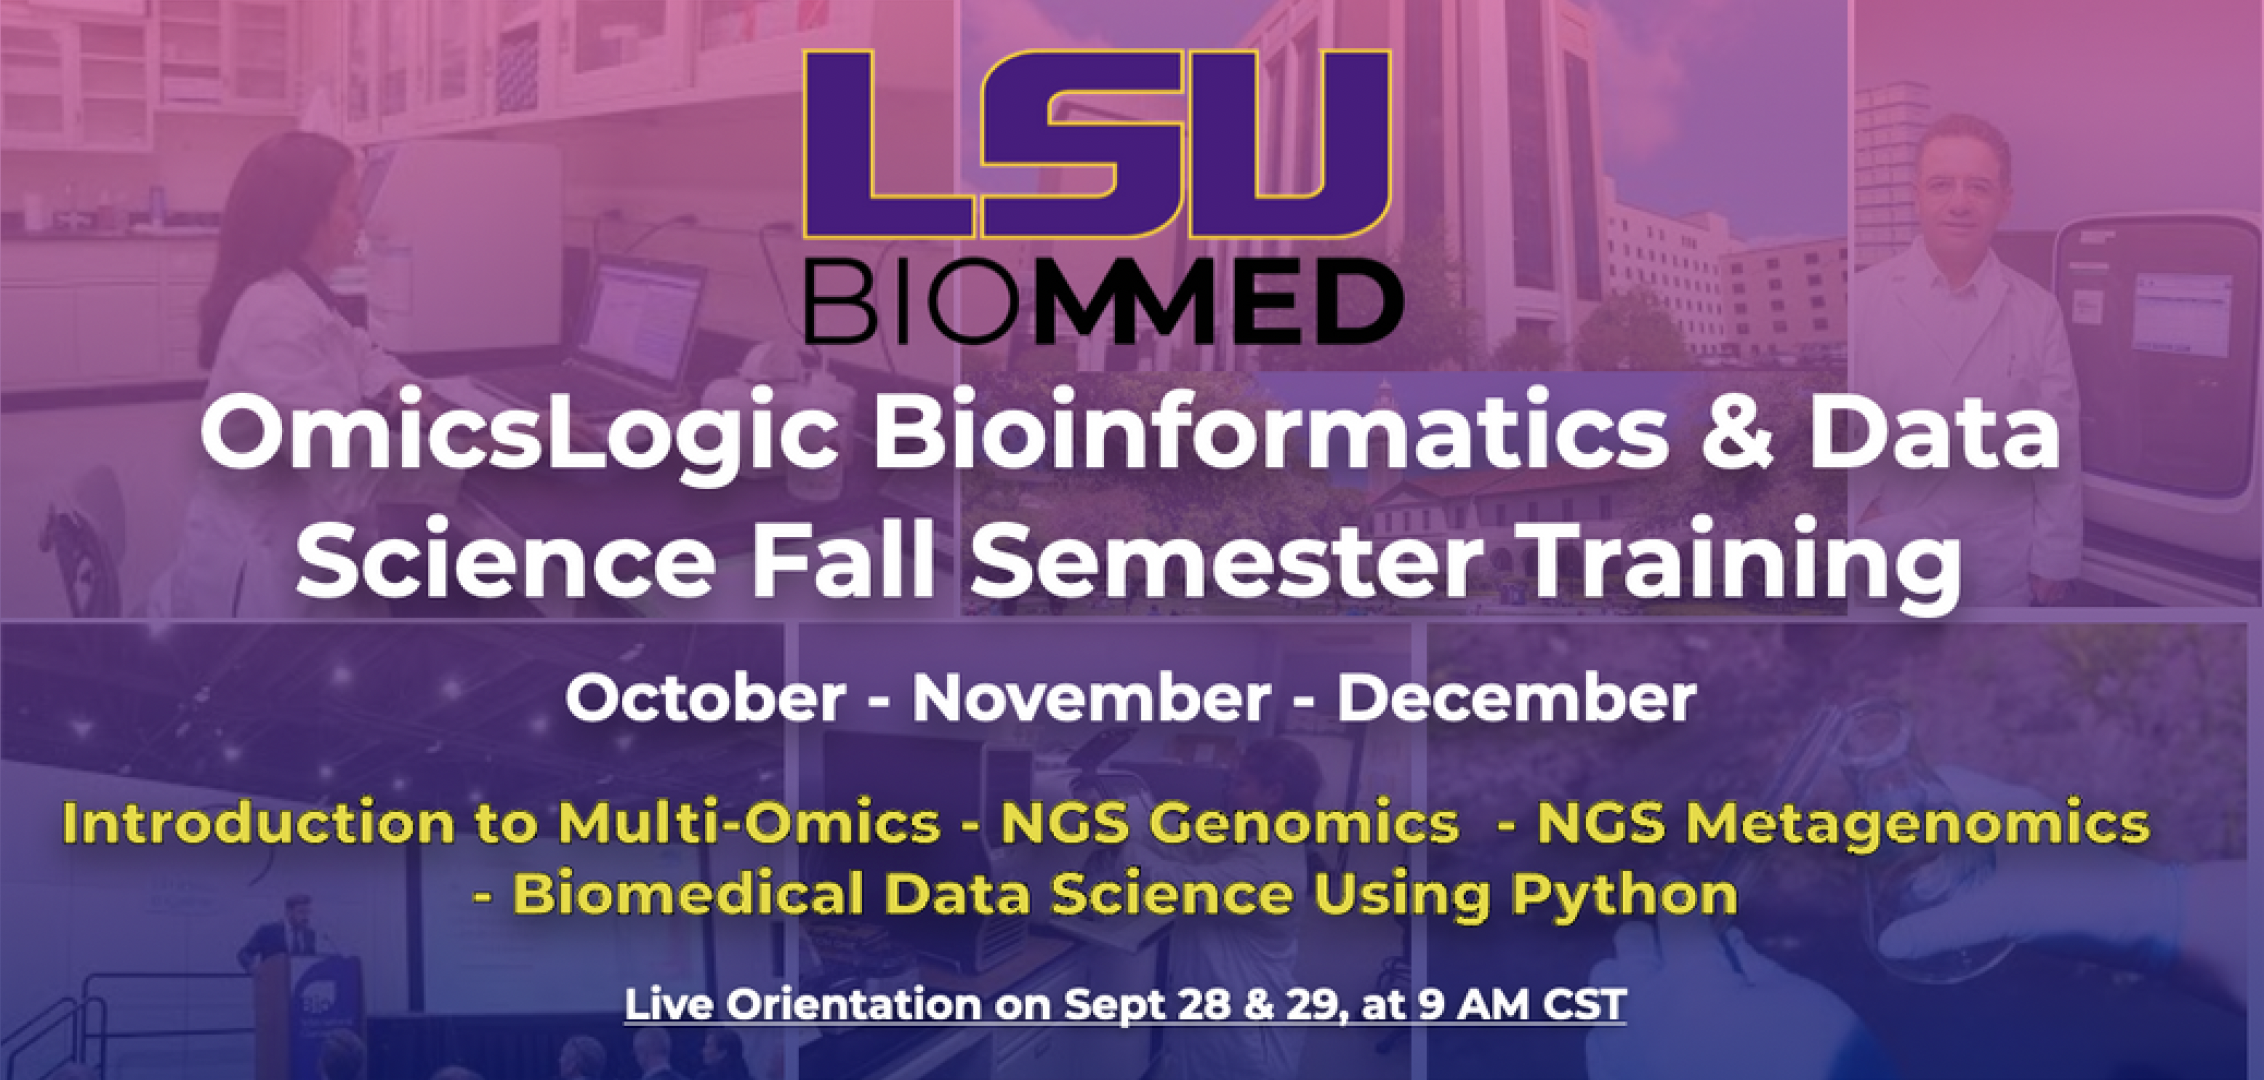 OmicsLogic Bioinformatics & Data Science Fall Semester Training for LBRN students